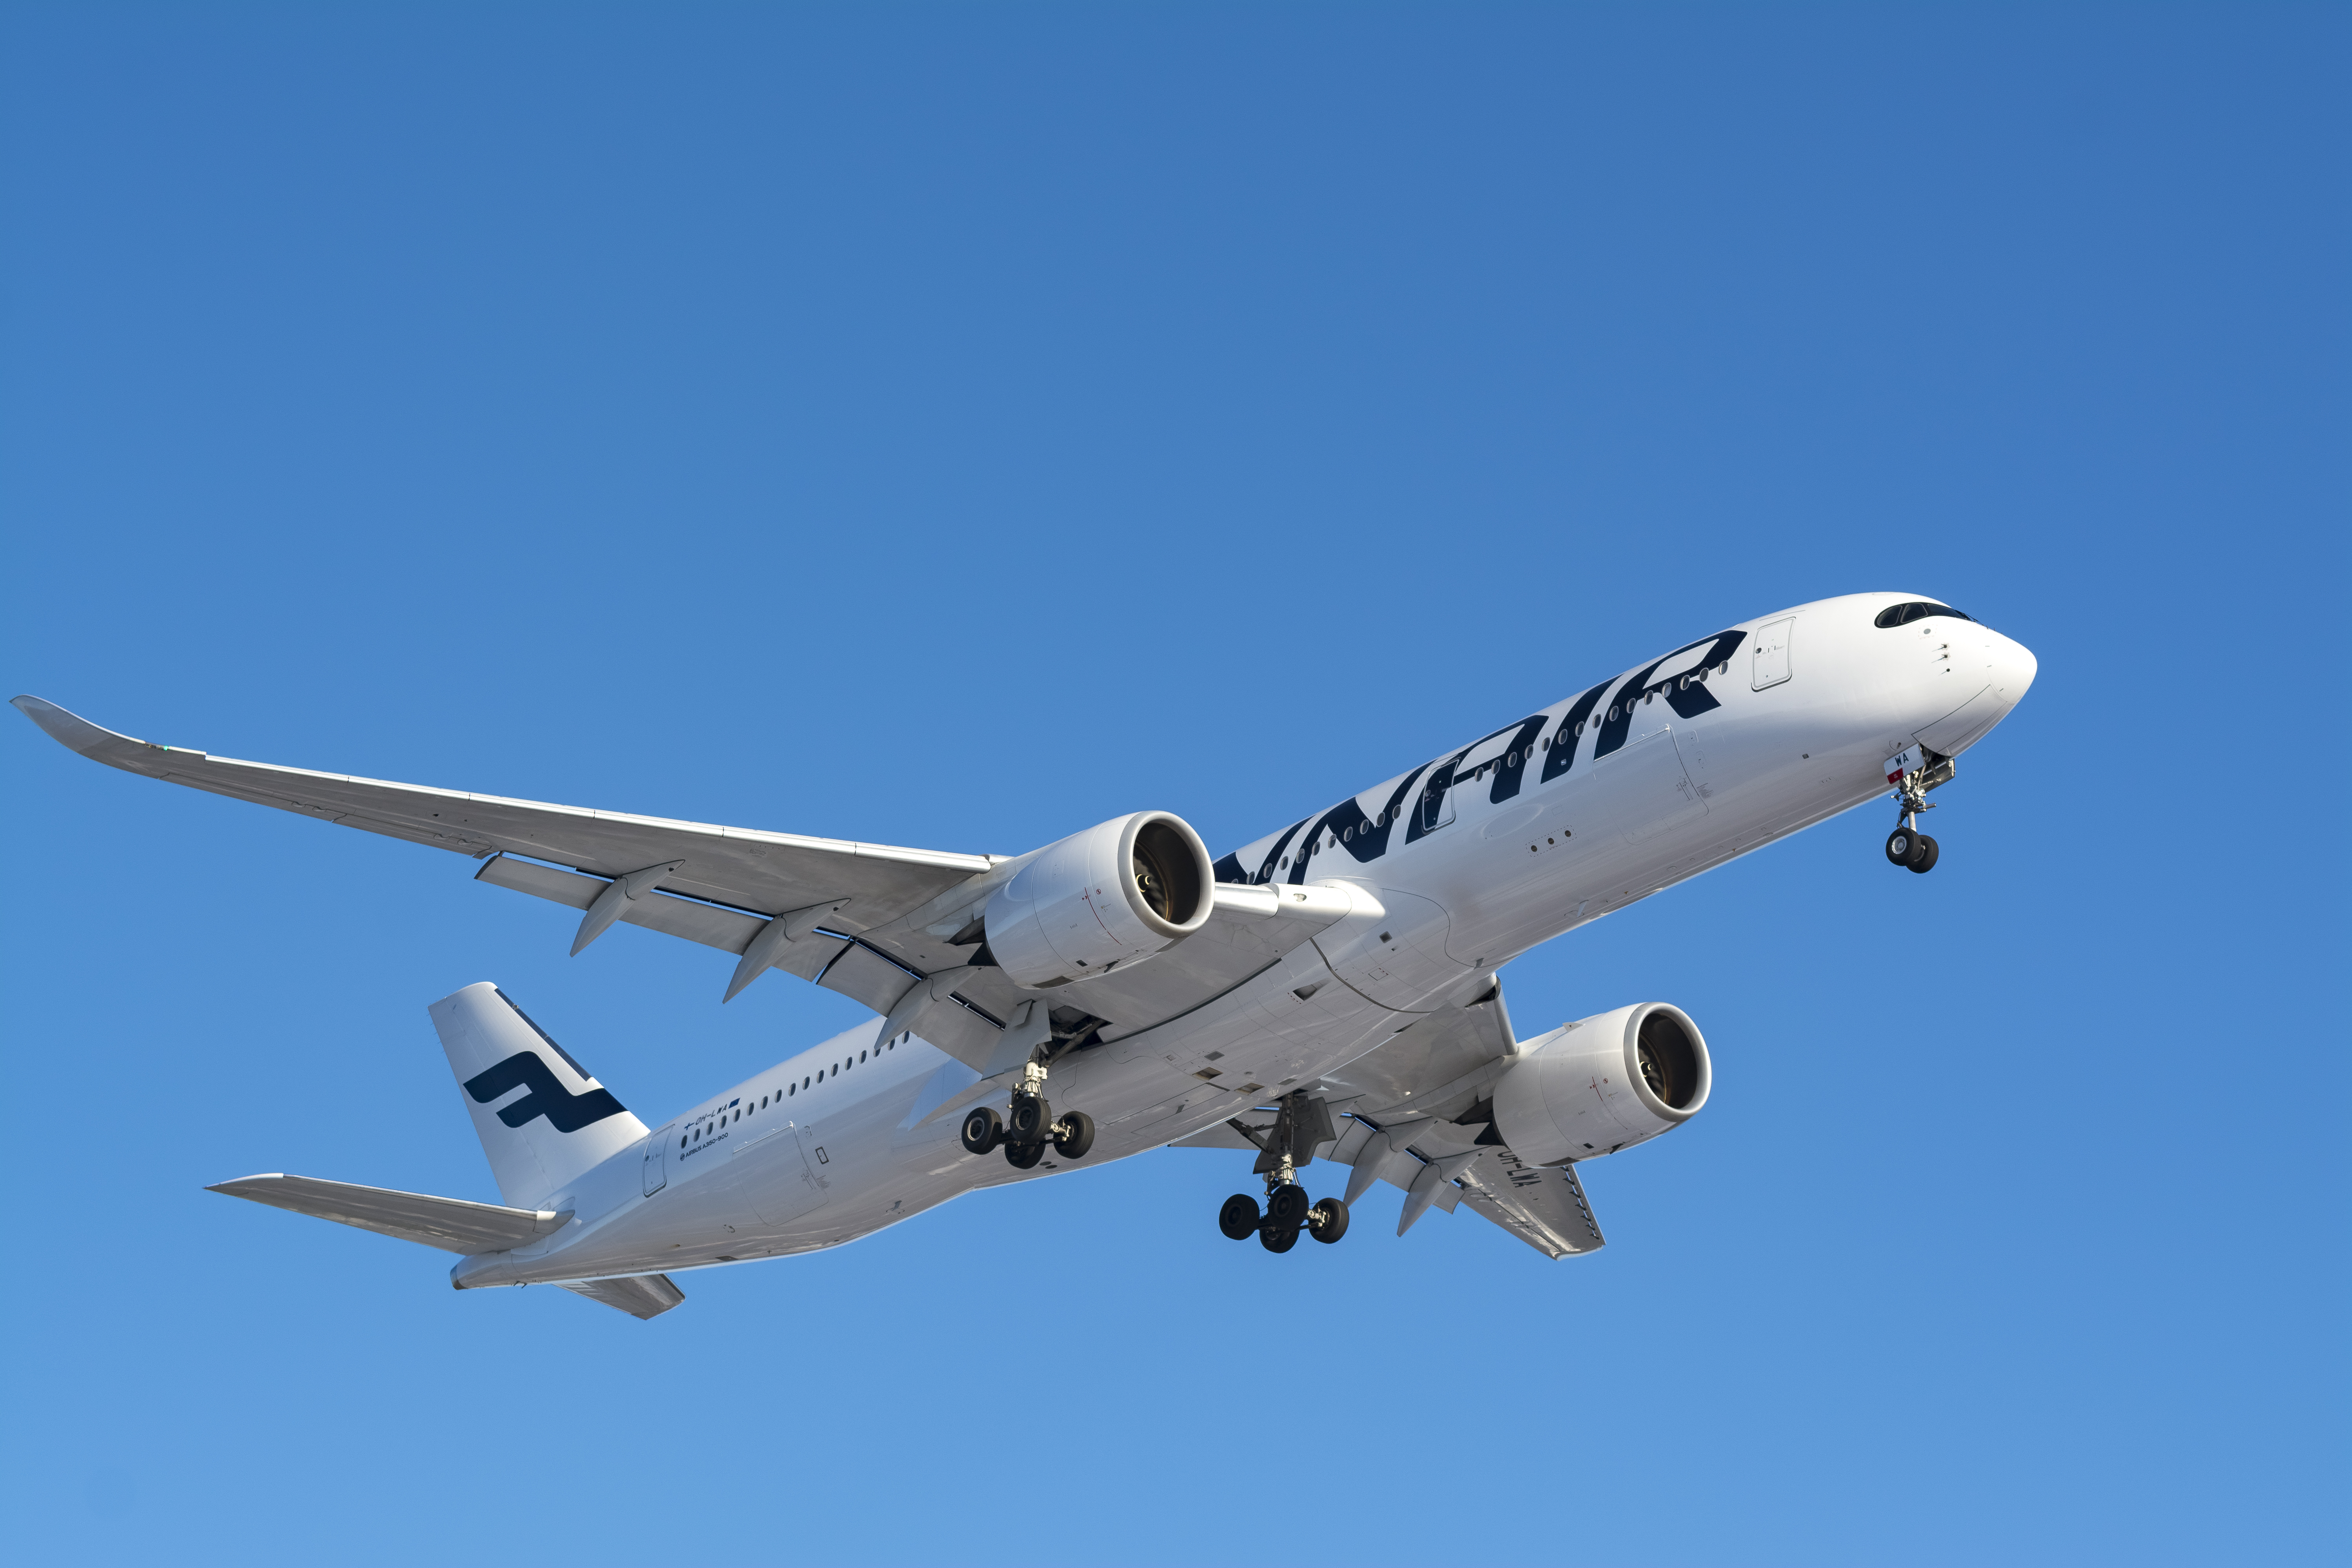 Finland’s Finnair starts commercial flights to Iceland